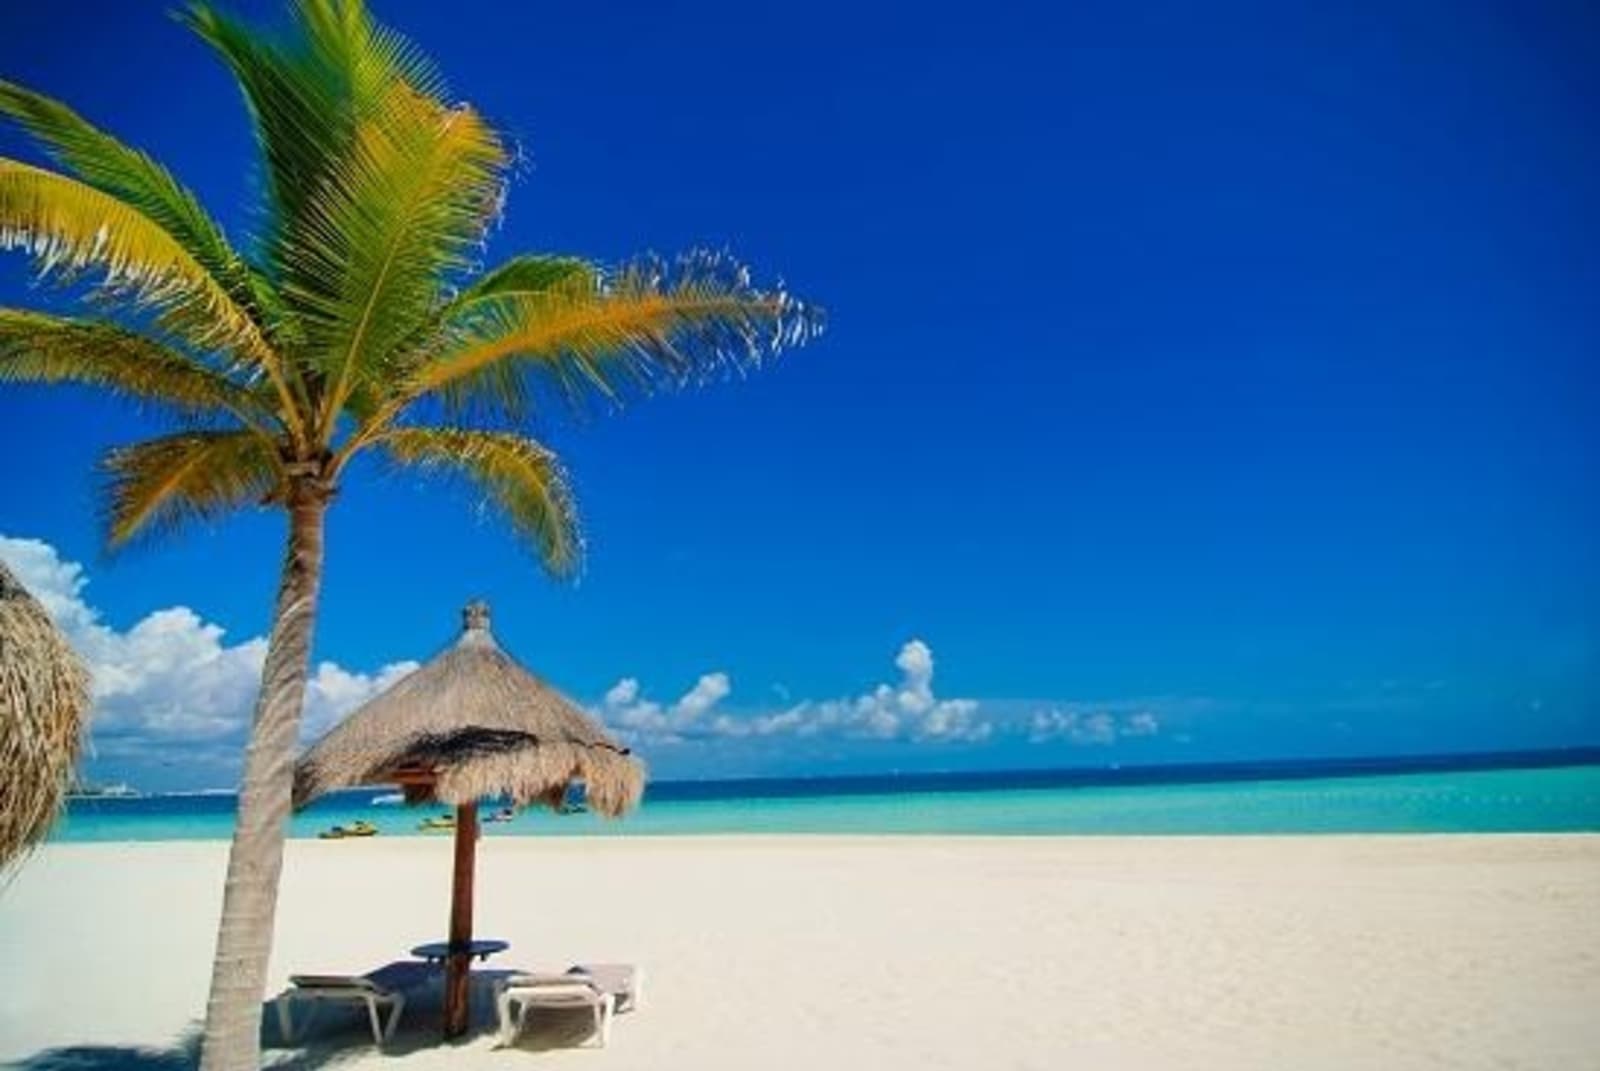 Beach umbrella and palm tree on a beach in Cancun.